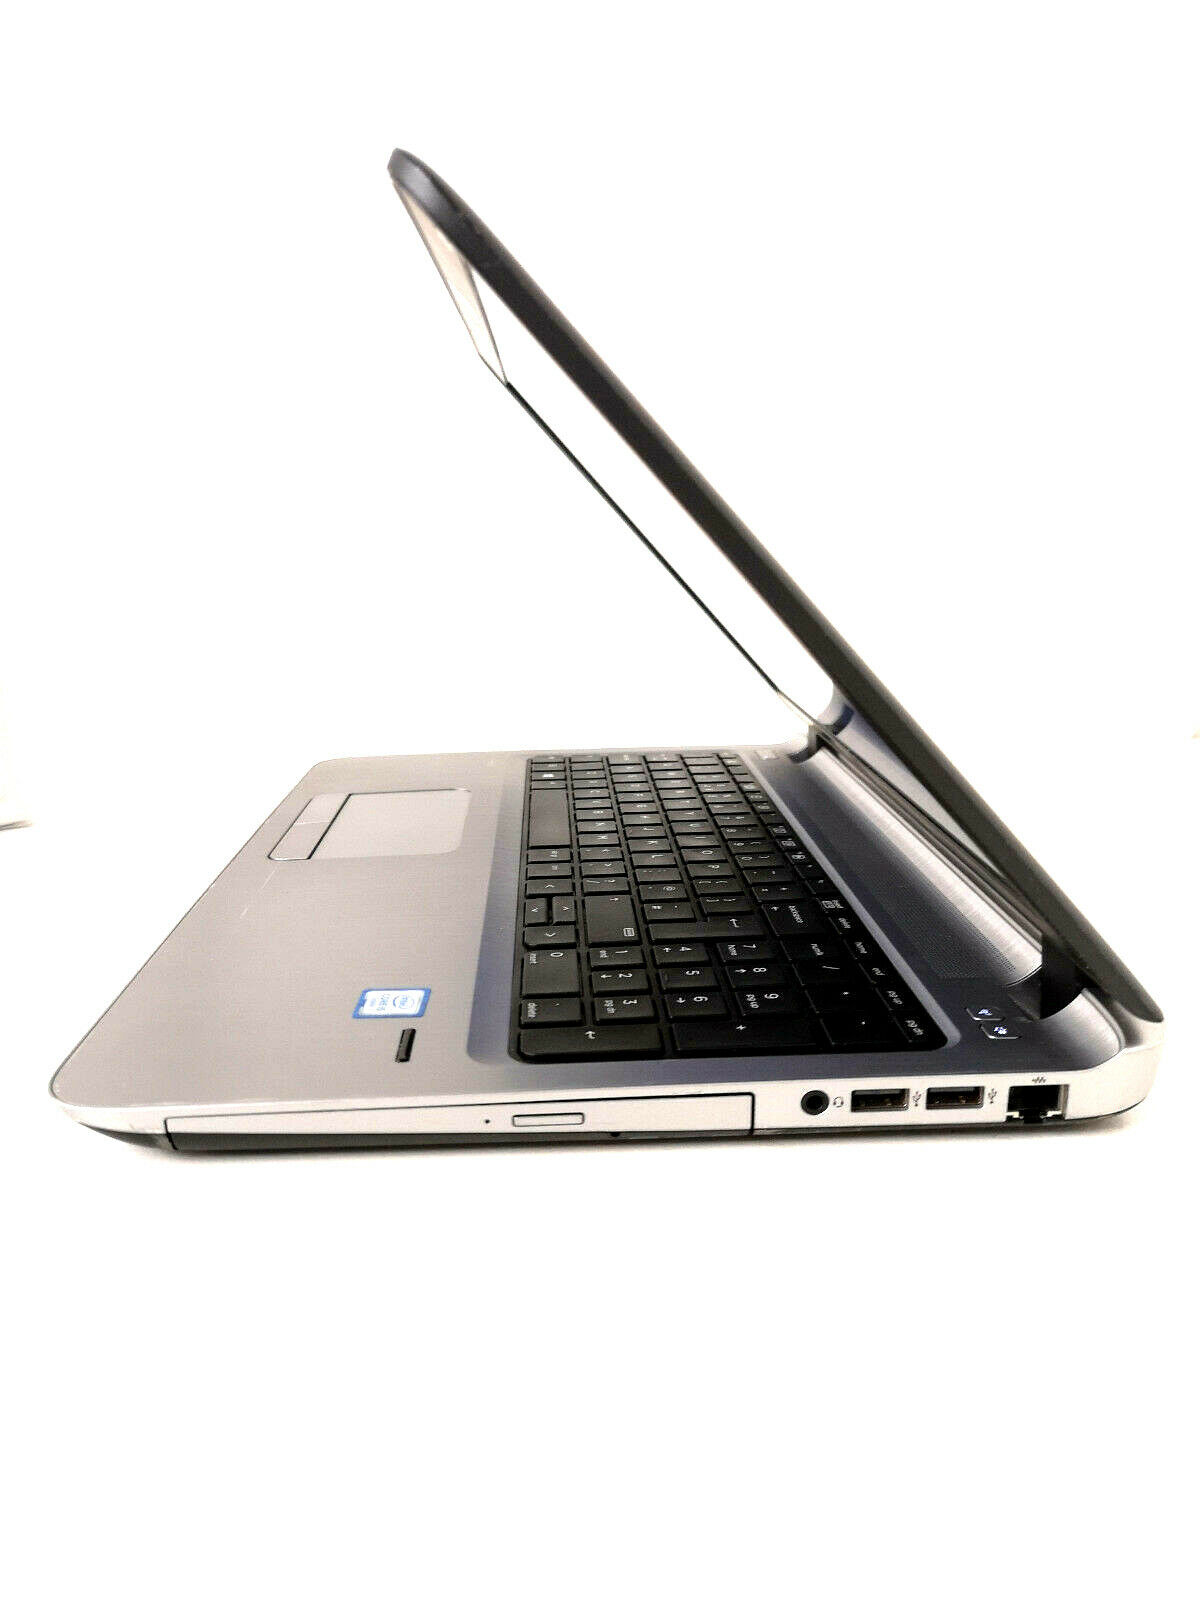 Refurbished HP Probook 450 G2 Laptop PC